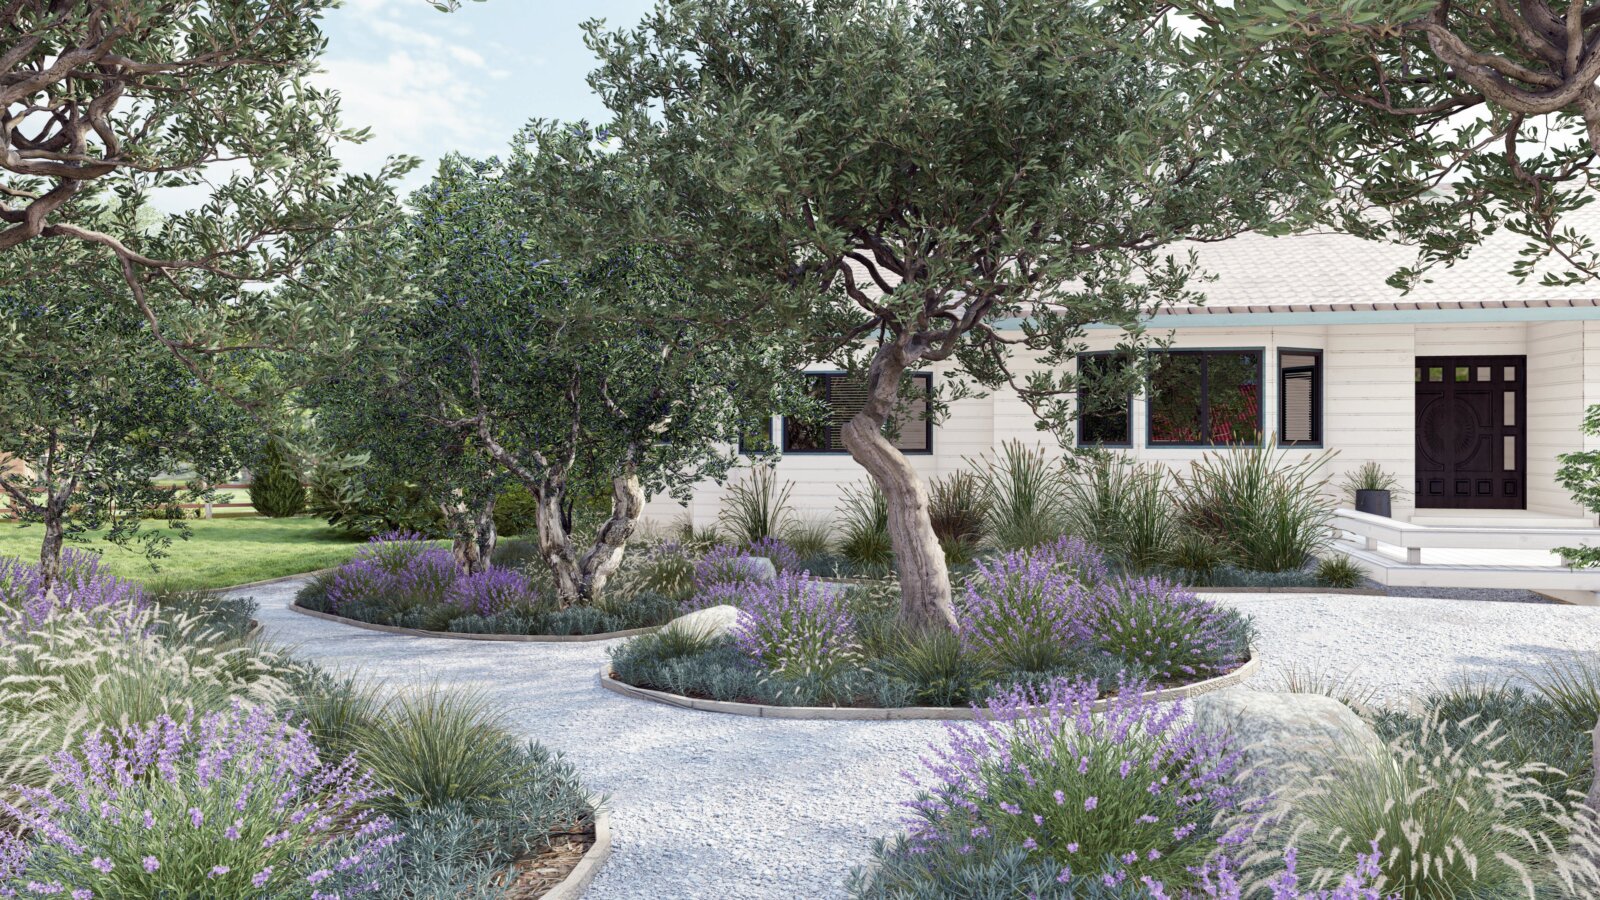 Flowers around tree front yard, lavender around olive trees